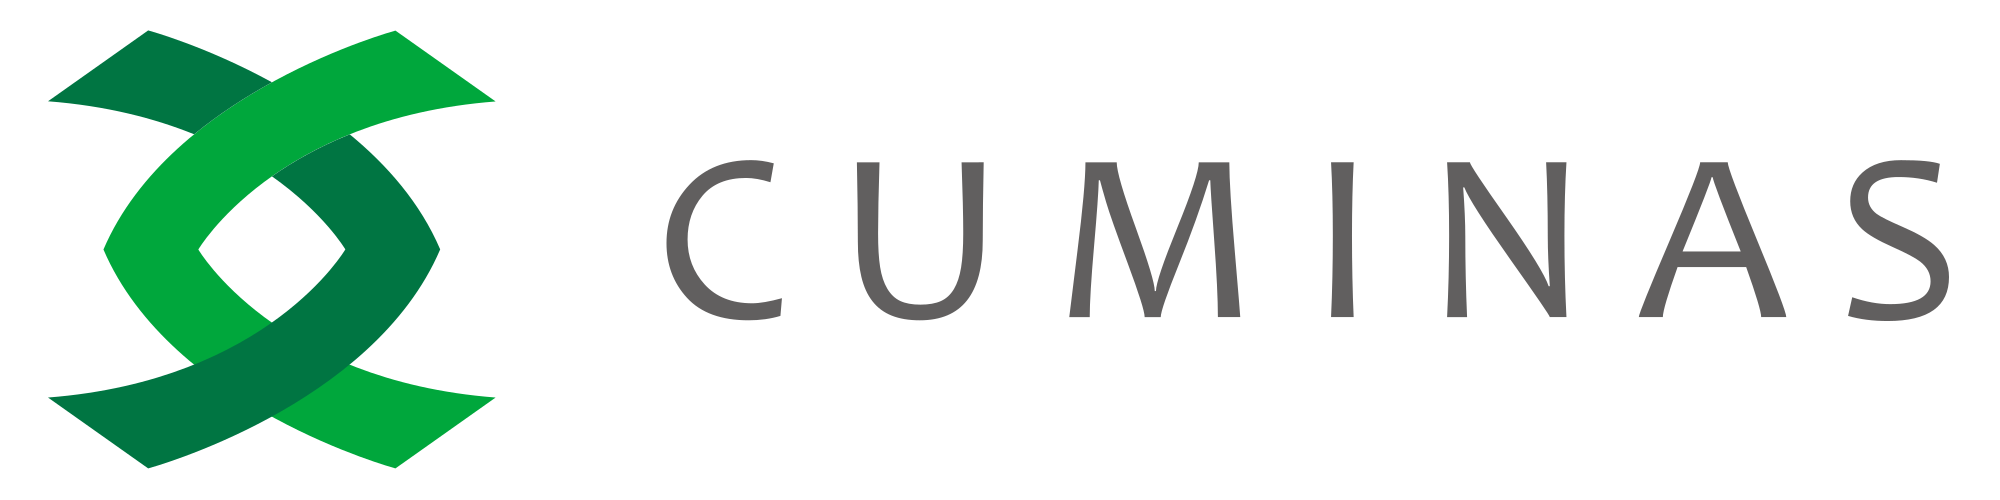 cuminas_logo